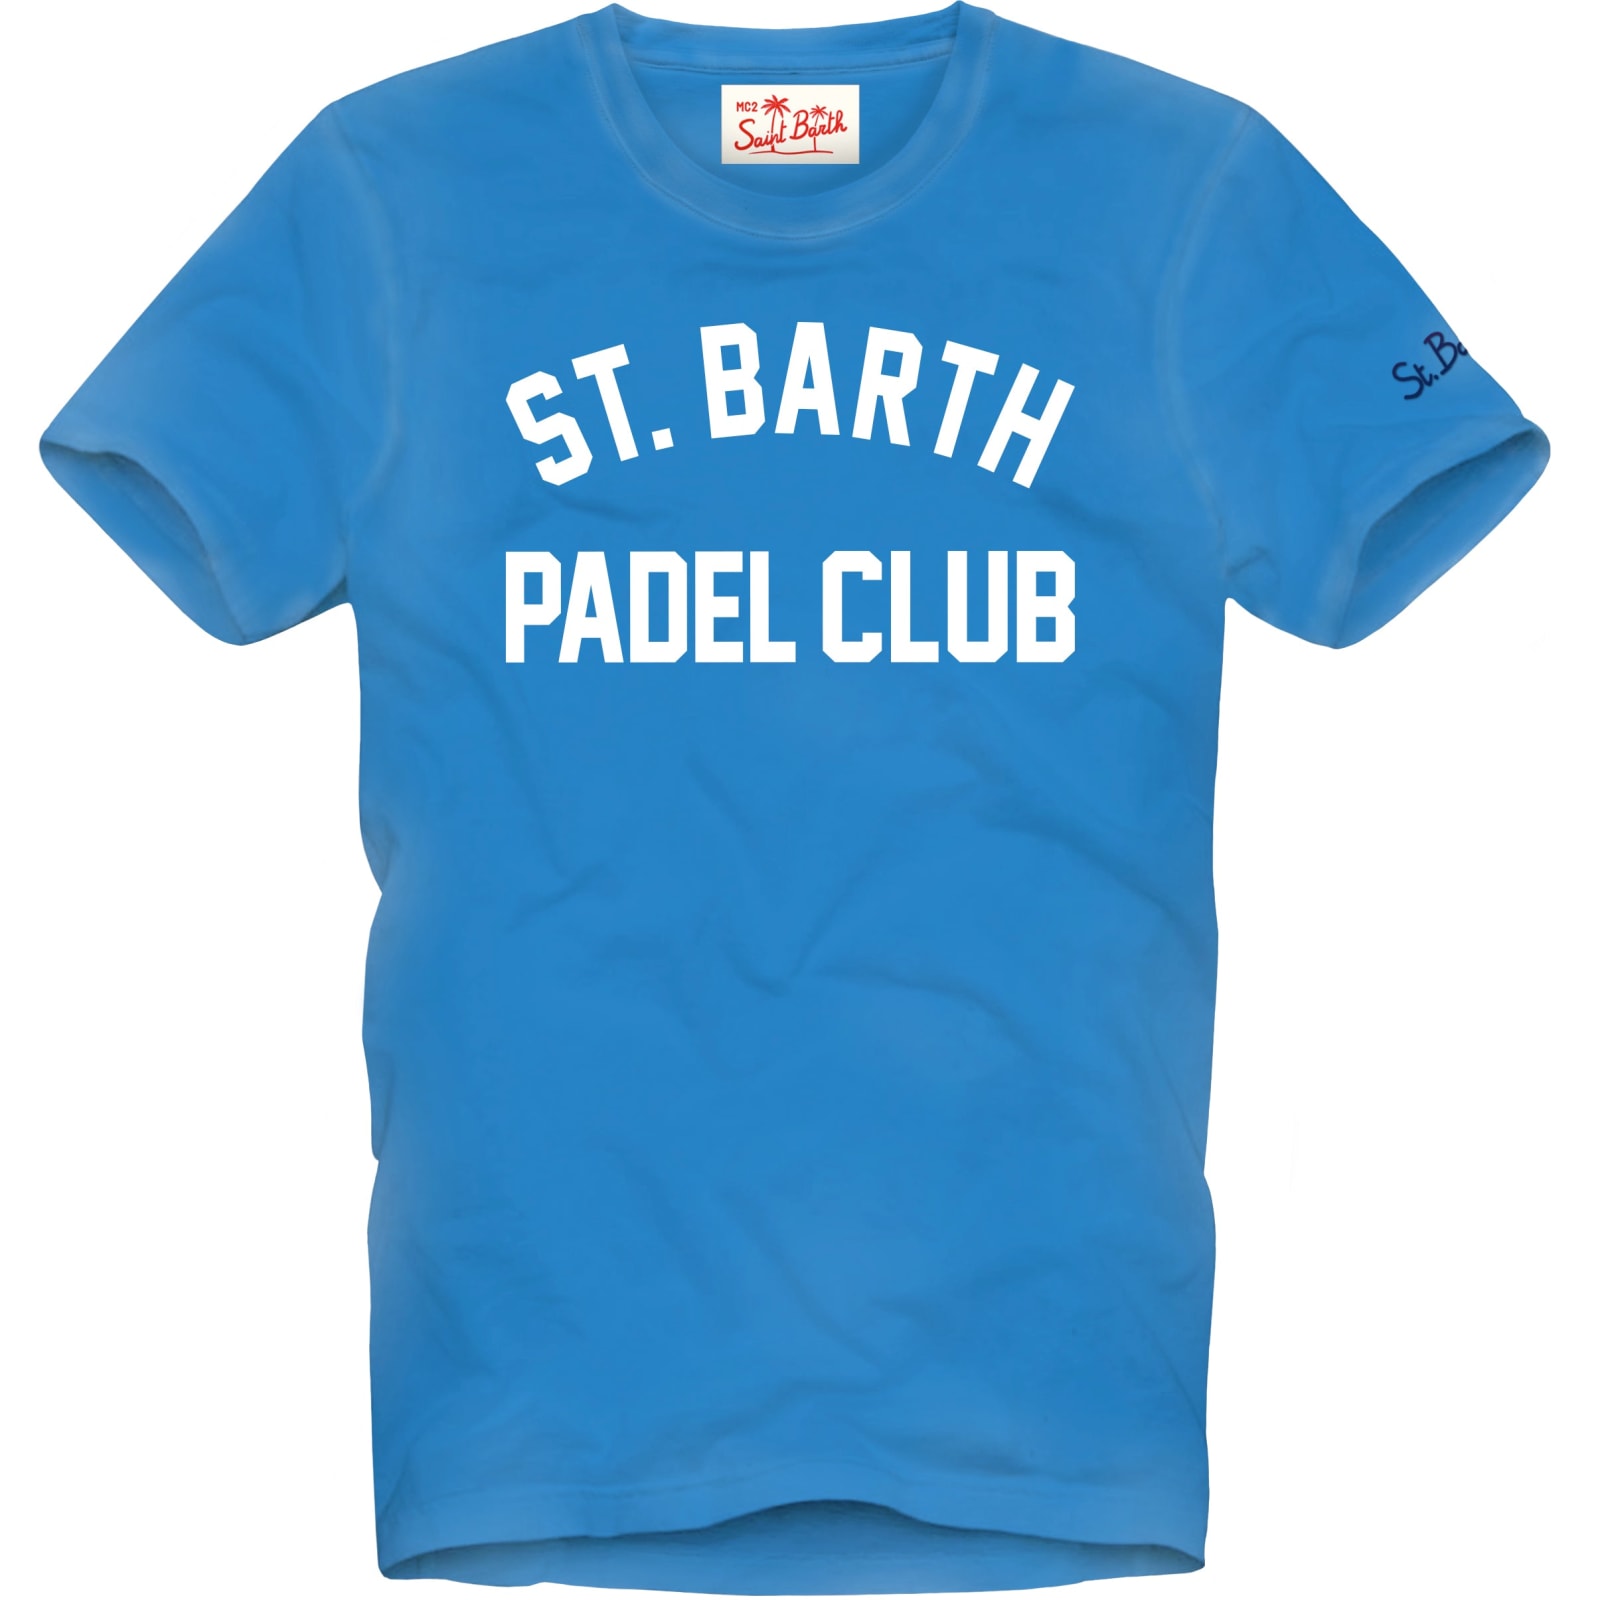 MC2 Saint Barth Man Bluette T-shirt With St. Barth Padel Club Print